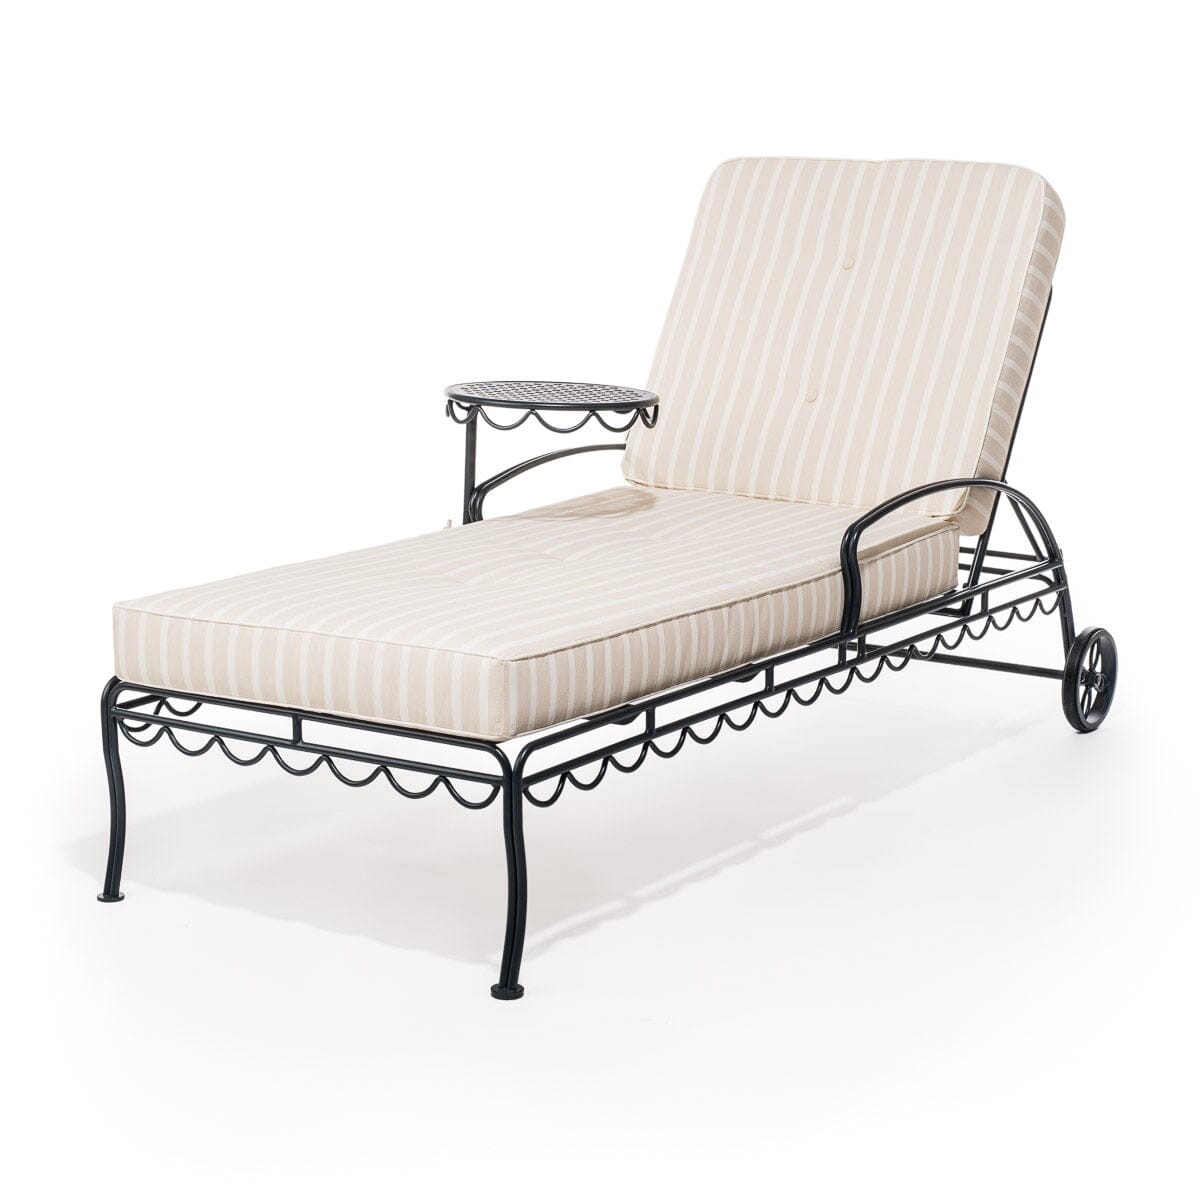 The Al Fresco Sun Lounger Cushion - Monaco Natural Stripe Al Fresco Sun Lounger Cushions Business & Pleasure Co 